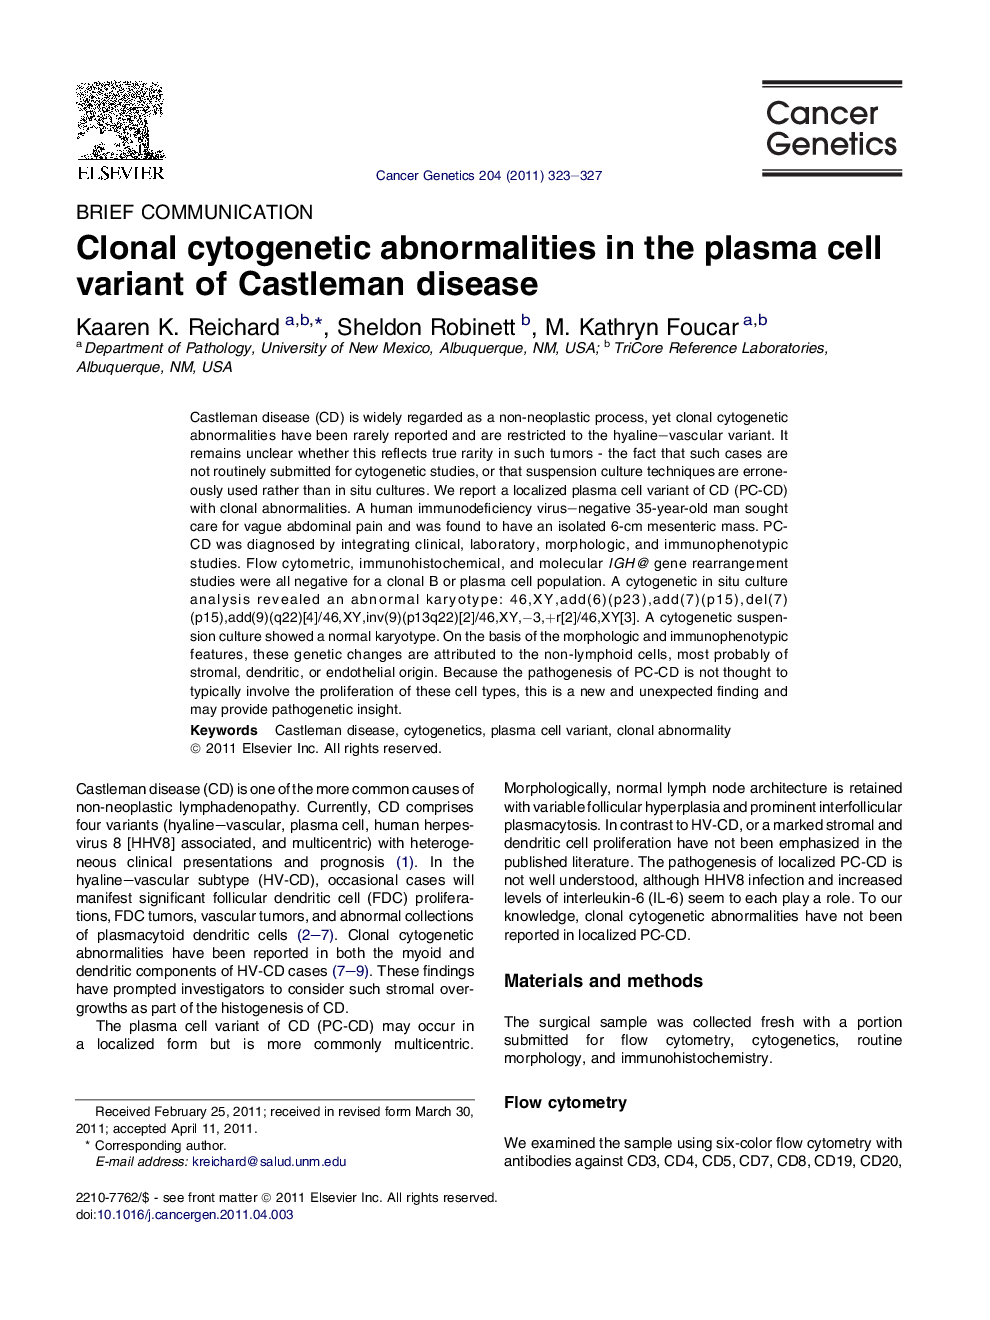 Clonal cytogenetic abnormalities in the plasma cell variant of Castleman disease